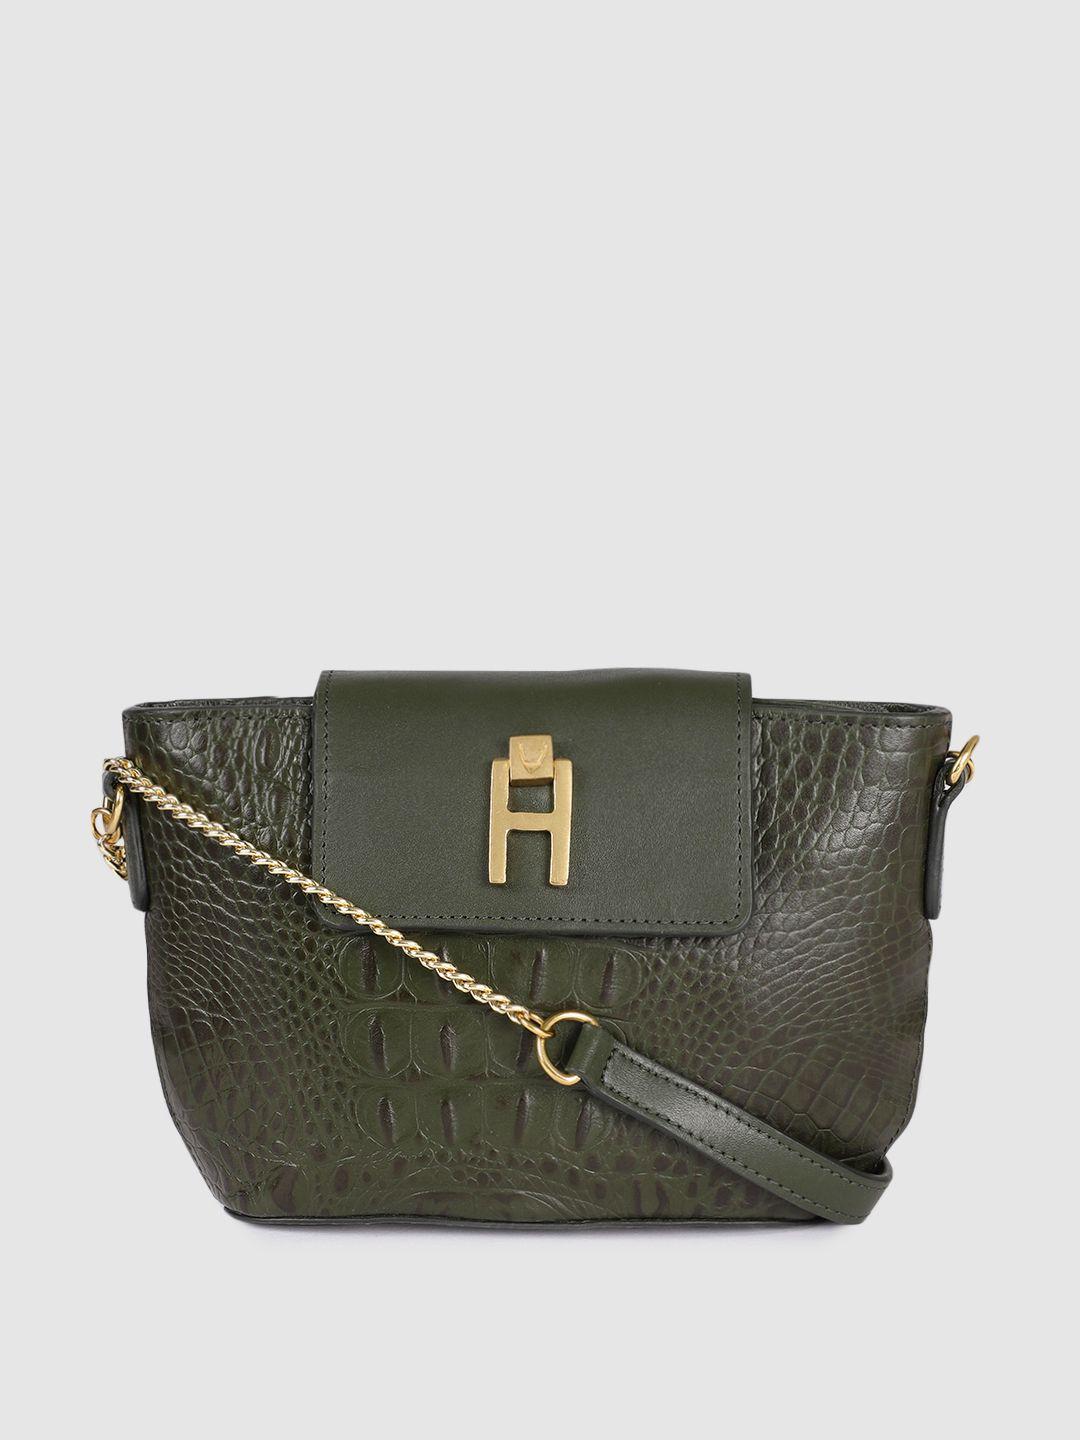 hidesign olive green animal textured leather structured sling bag